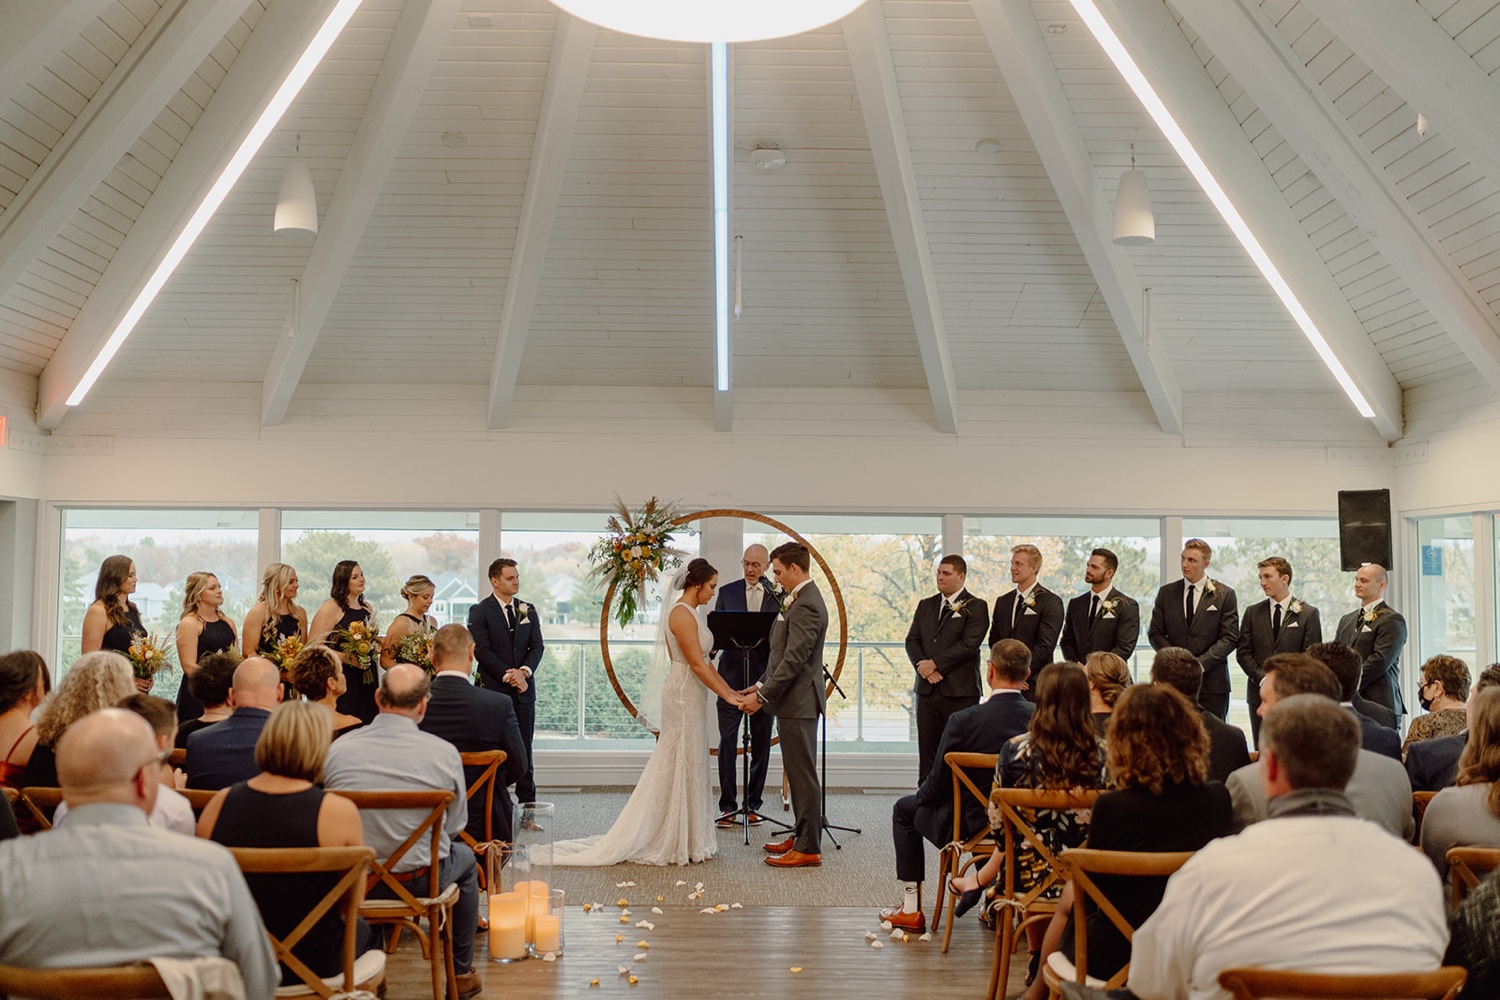 Royal Golf club indoor wedding ceremony photos. Lake Elmo, Minnesota. 